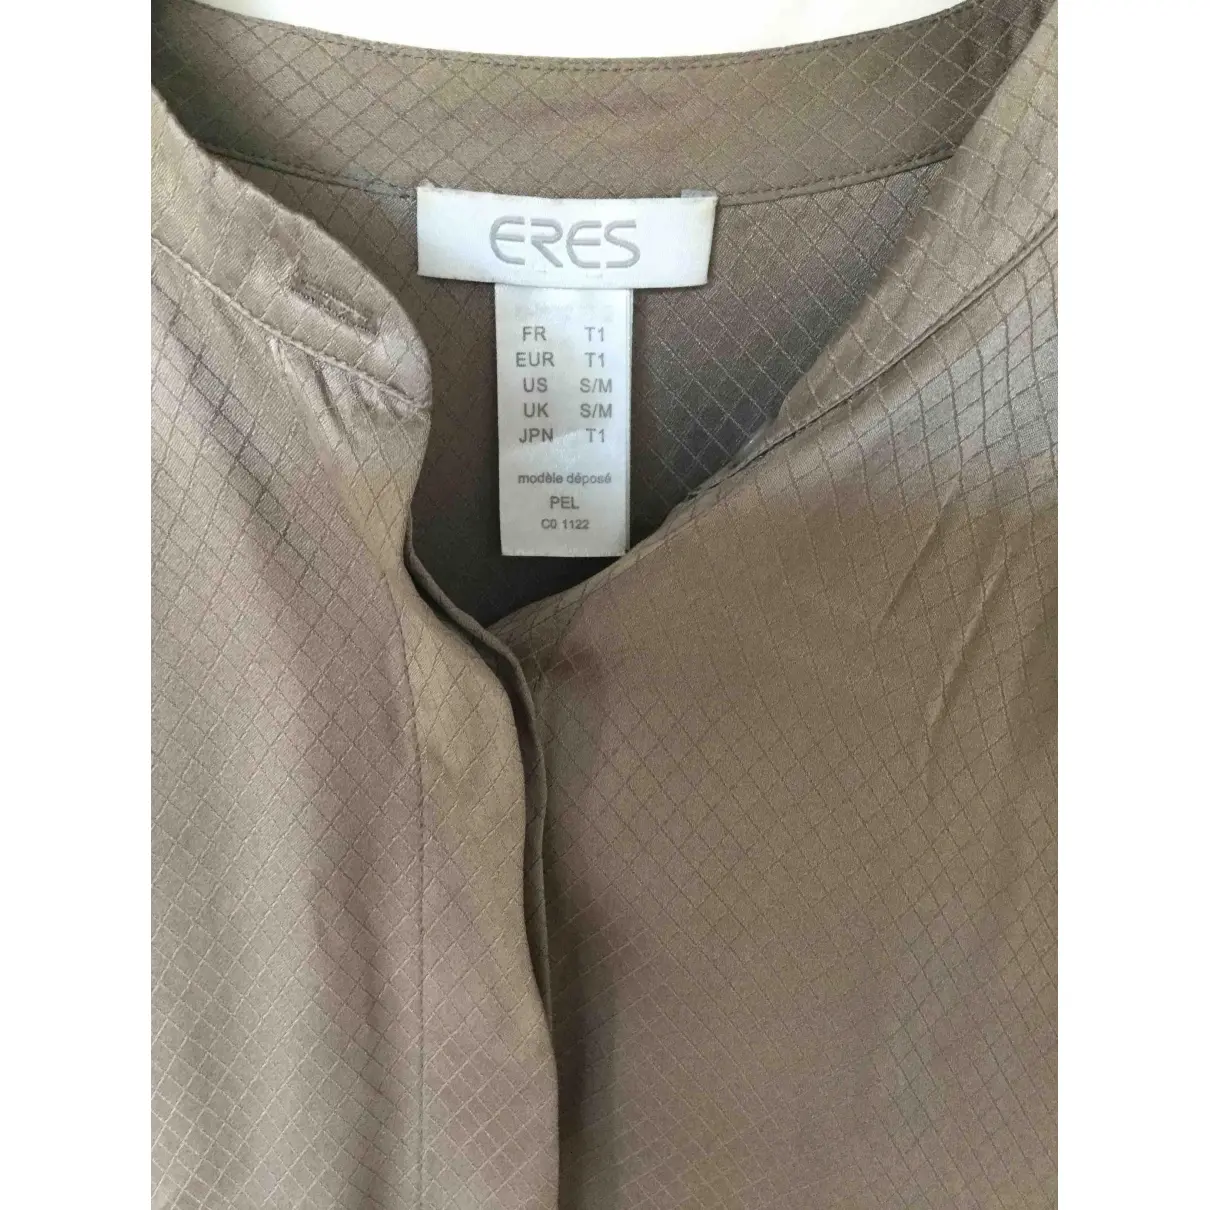 Buy Eres Silk shirt online